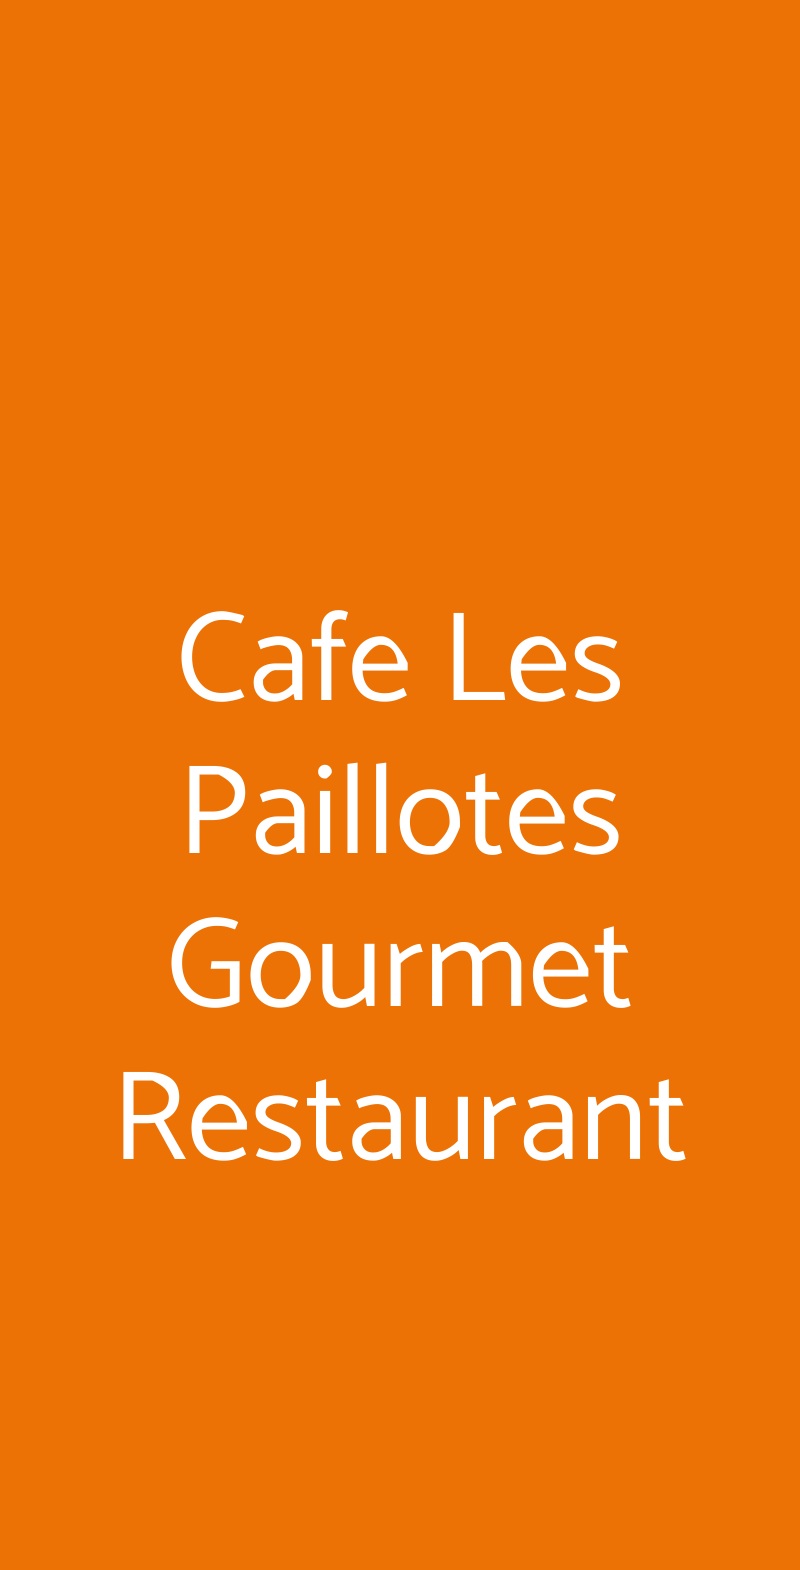 Cafe Les Paillotes Gourmet Restaurant Pescara menù 1 pagina